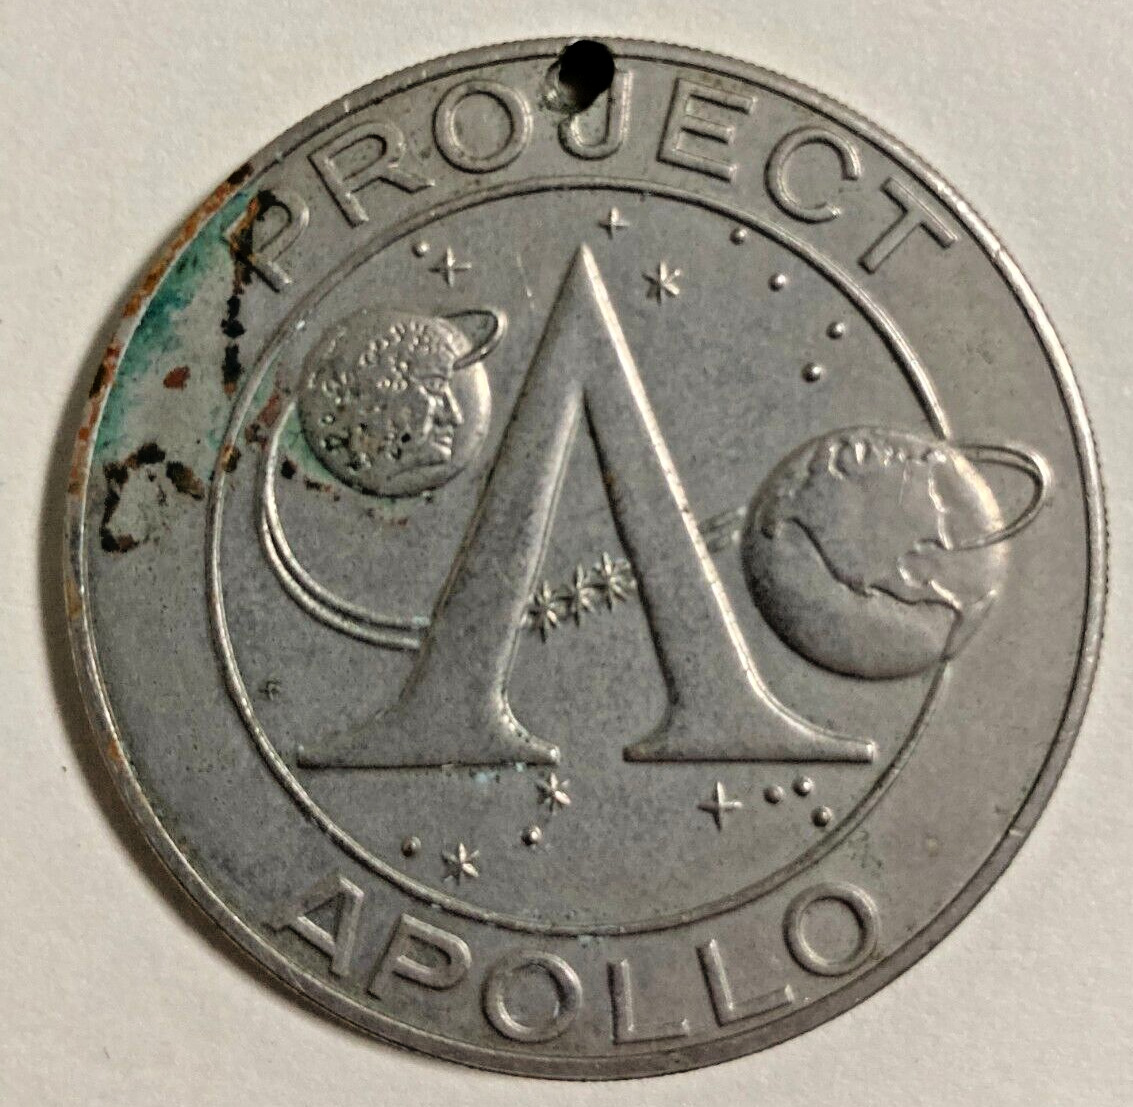 Apollo Seven Project Apollo October 11, 1968 Schirra Eisele Cunningham Coin